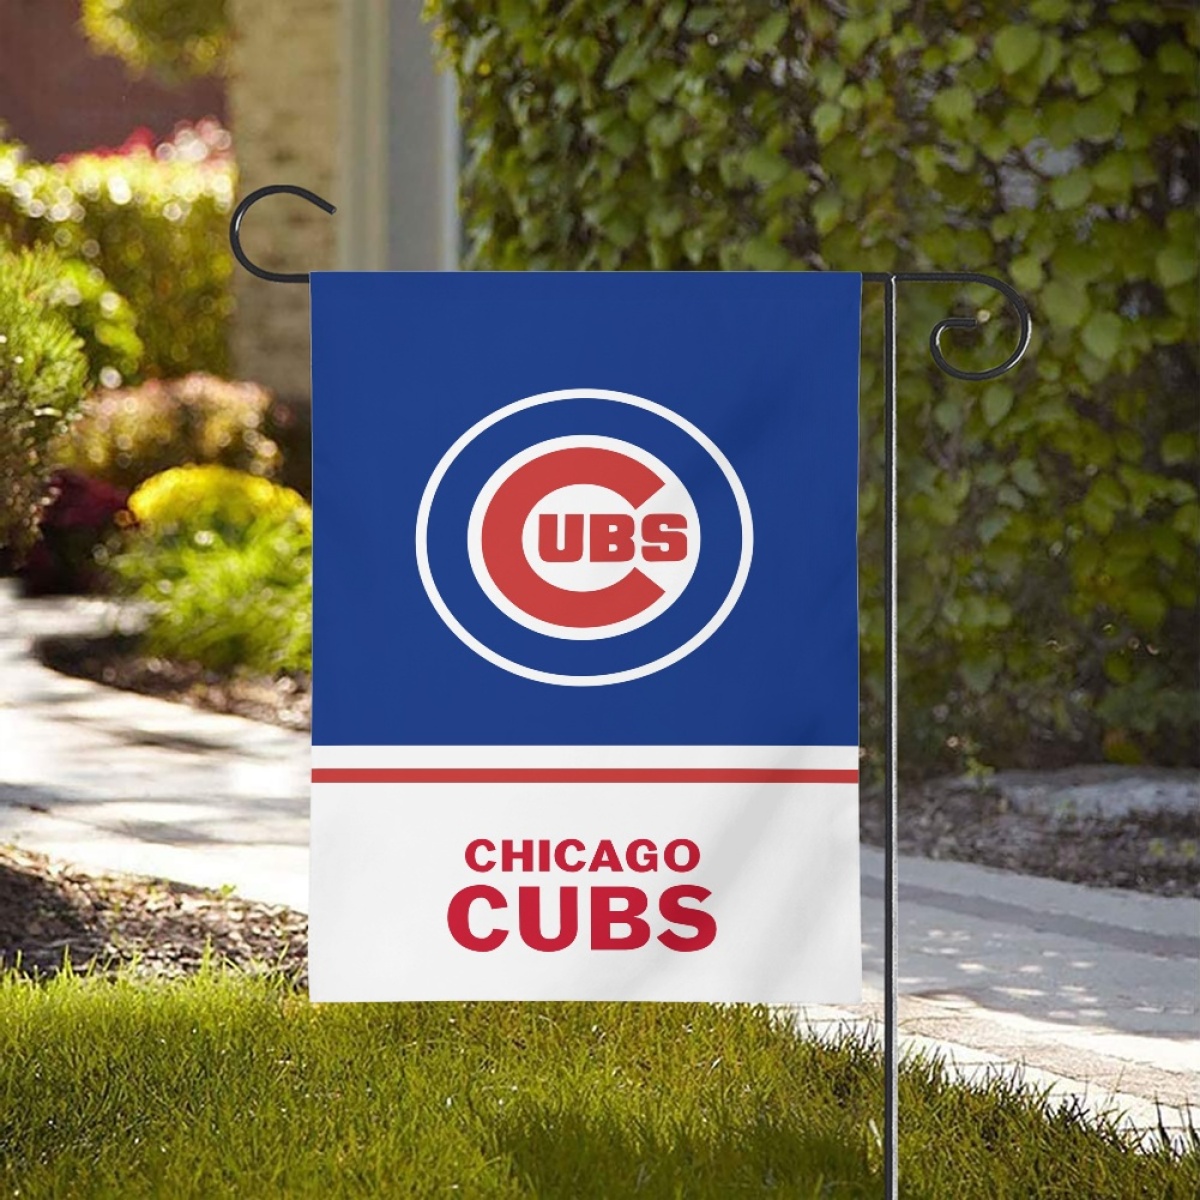 Chicago Cubs Double-Sided Garden Flag 001 (Pls check description for details)